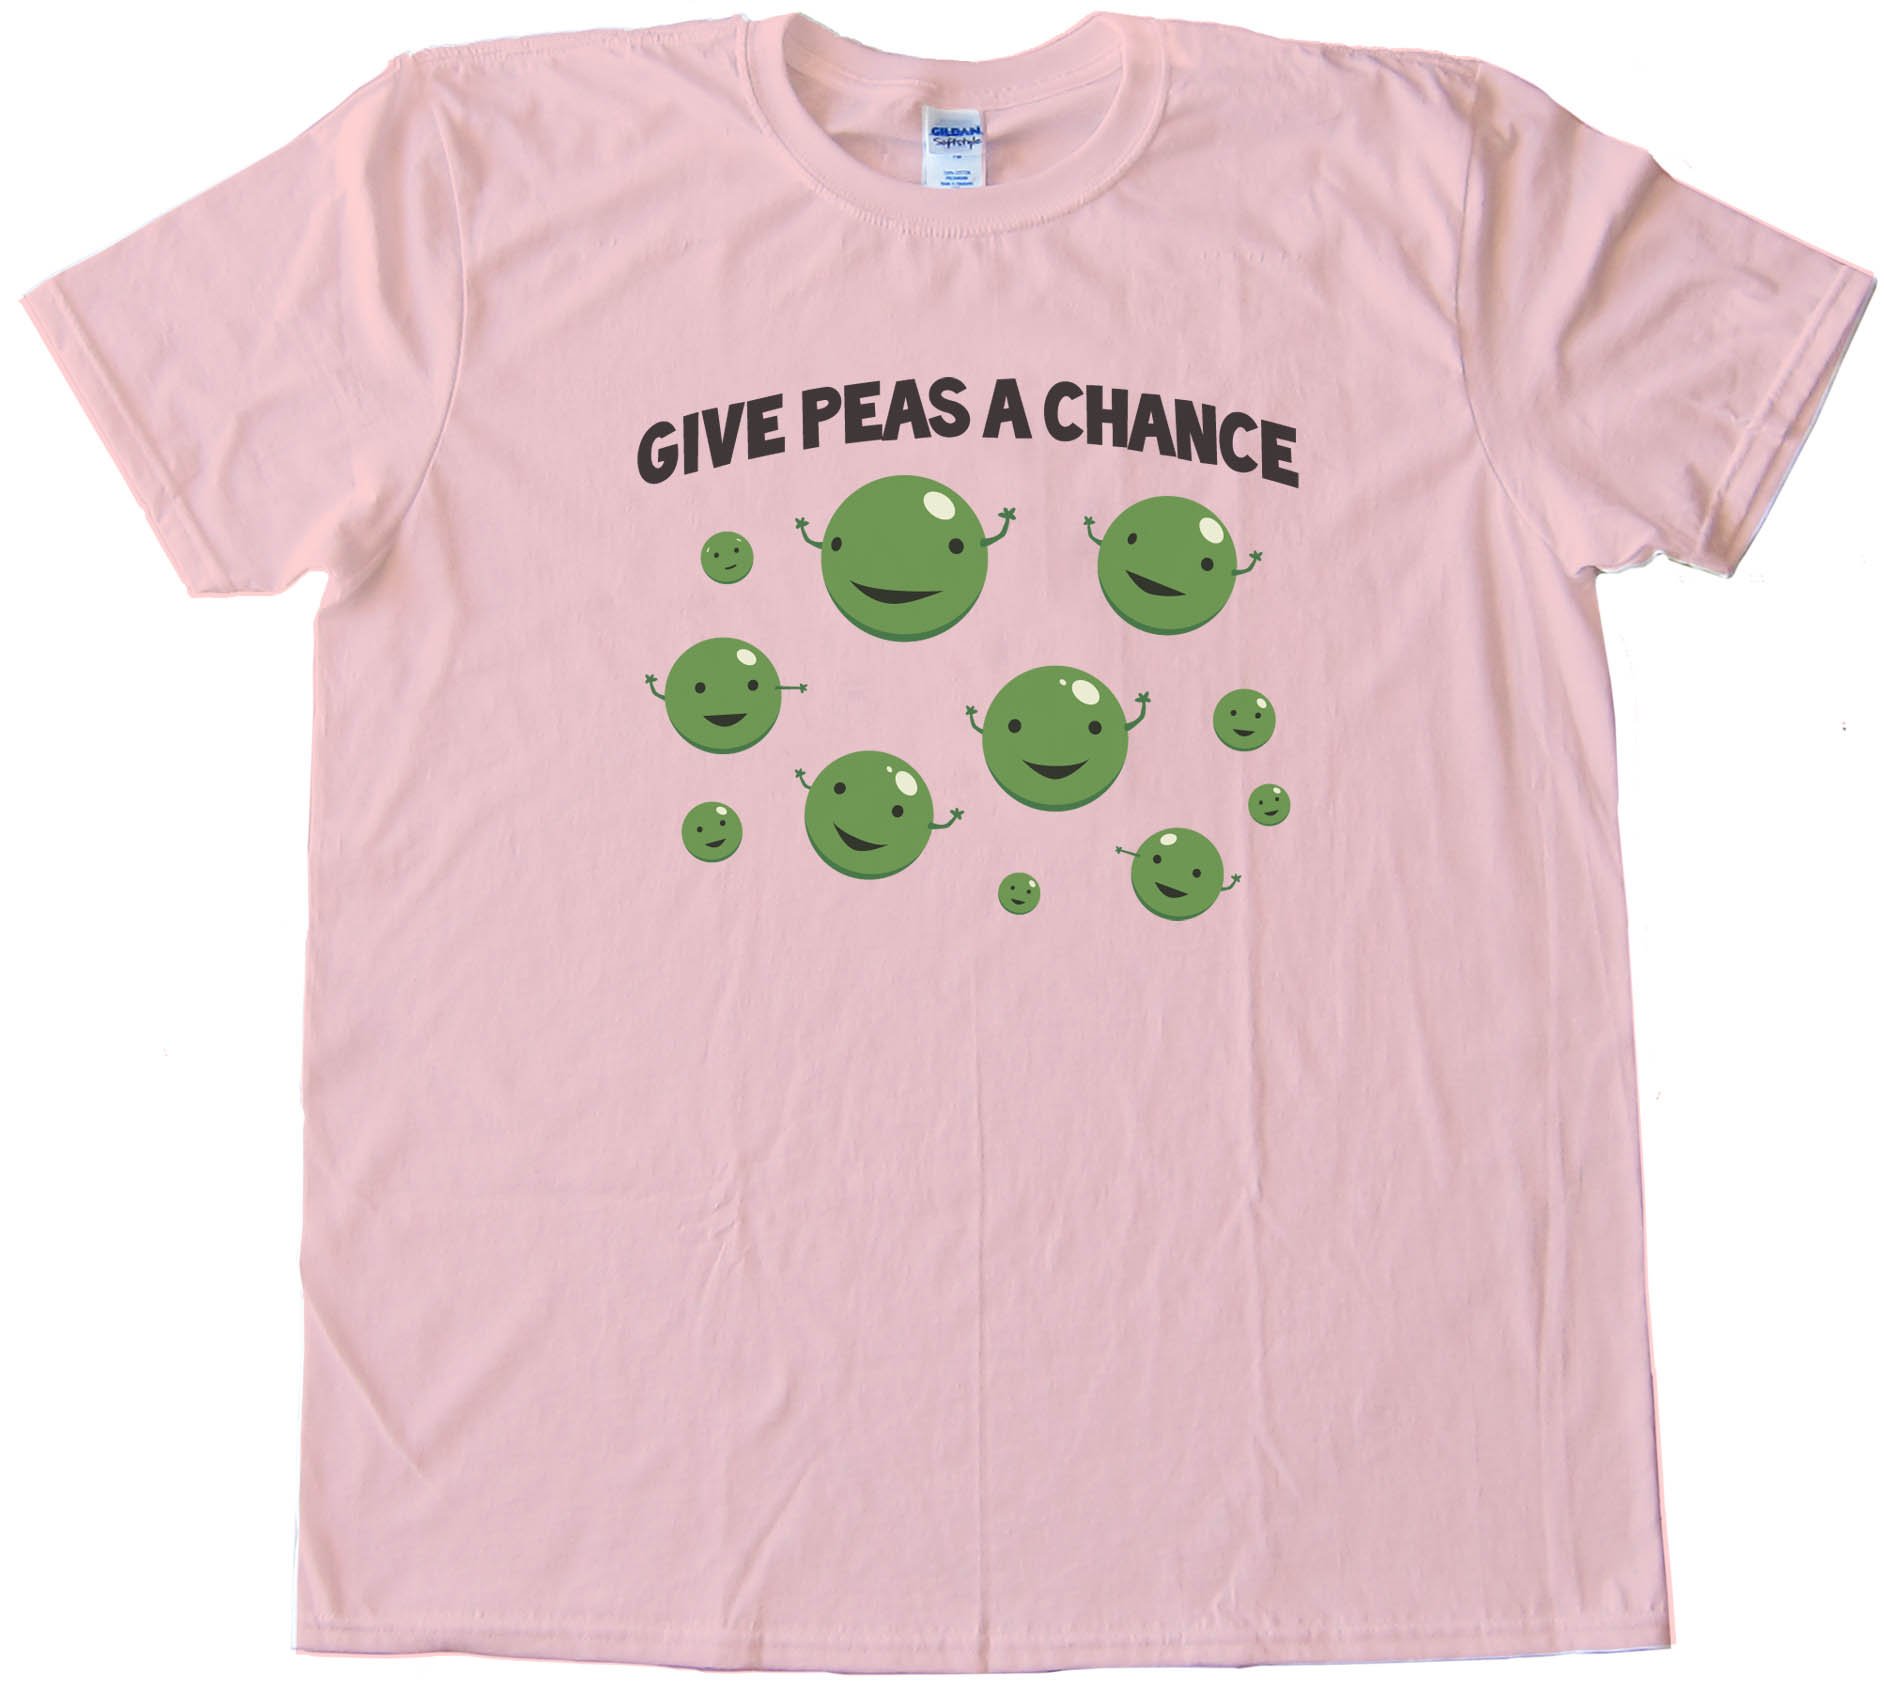 Give Peas A Chance -Tee Shirt